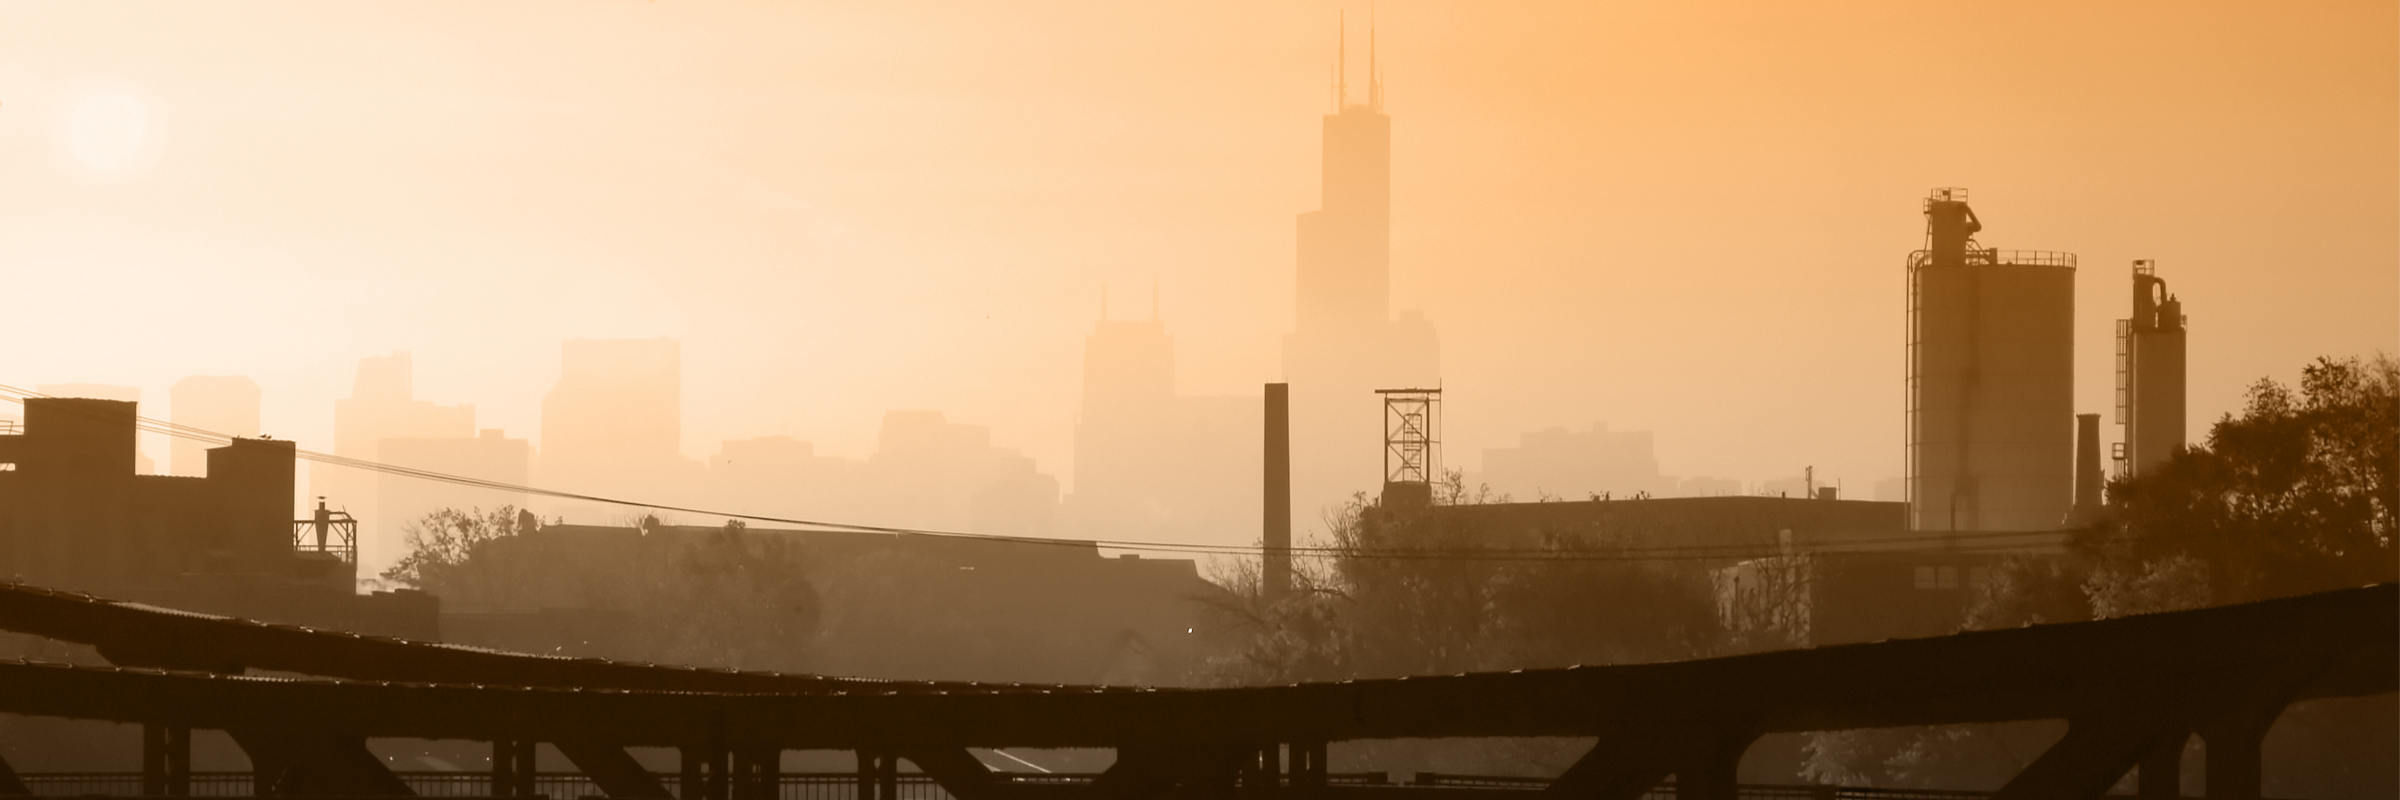 Chicago's air pollution hotspots: New sensor network reveals neighborhood air quality disparities